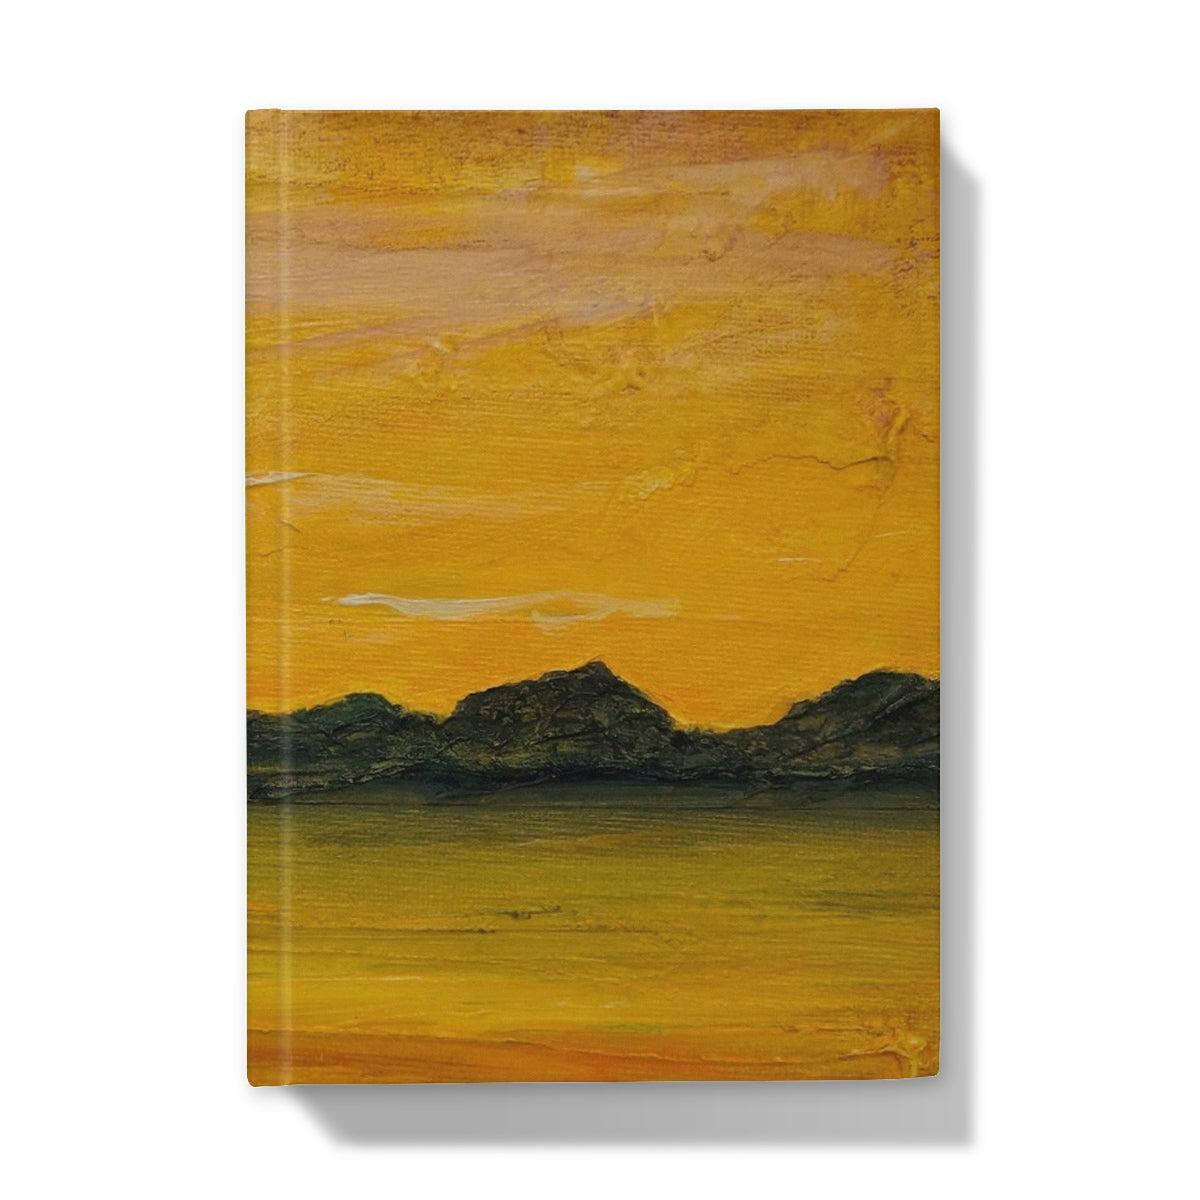 Jura Sunset Art Gifts Hardback Journal-Journals & Notebooks-Hebridean Islands Art Gallery-5"x7"-Lined-Paintings, Prints, Homeware, Art Gifts From Scotland By Scottish Artist Kevin Hunter